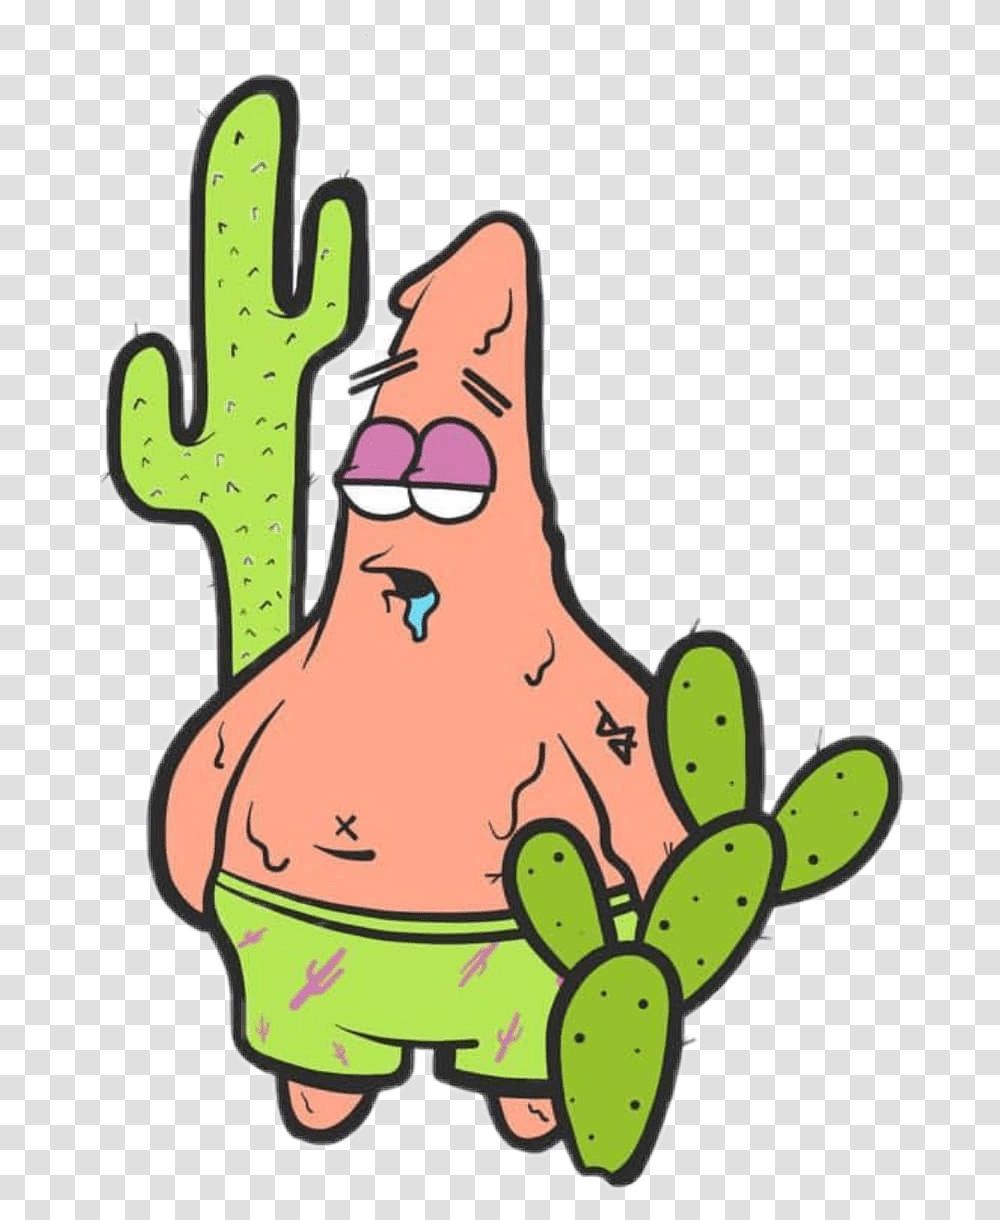 Spongebob Patrick Star Patrickstar Cactus Patrick Star Cactus Transparent Png